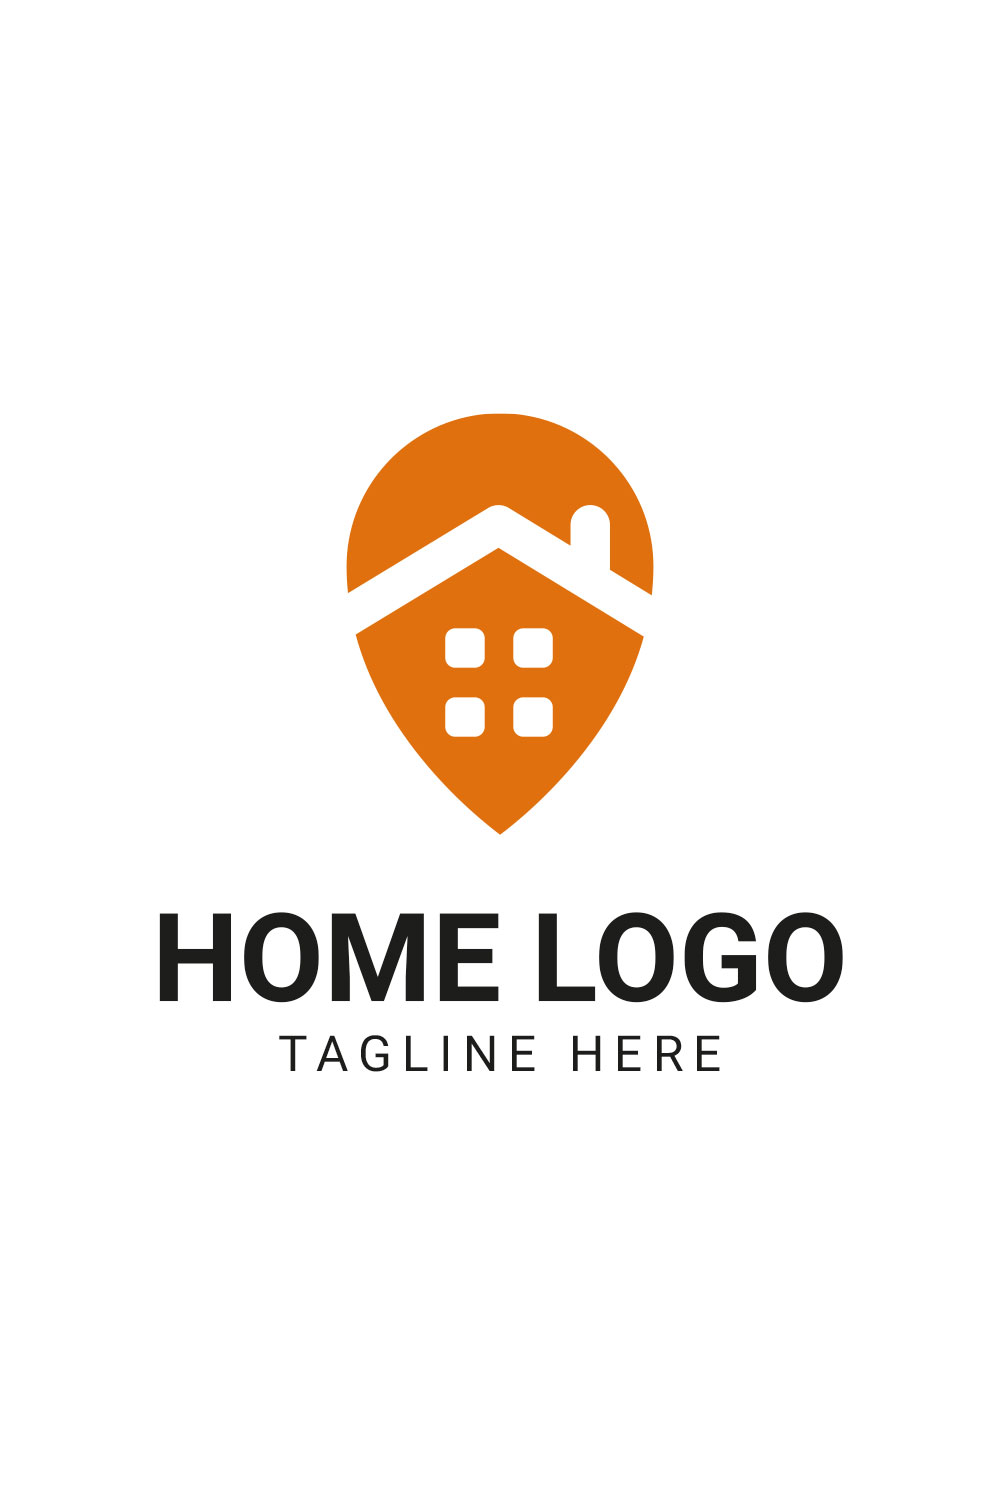 Home Logo Design Template pinterest preview image.